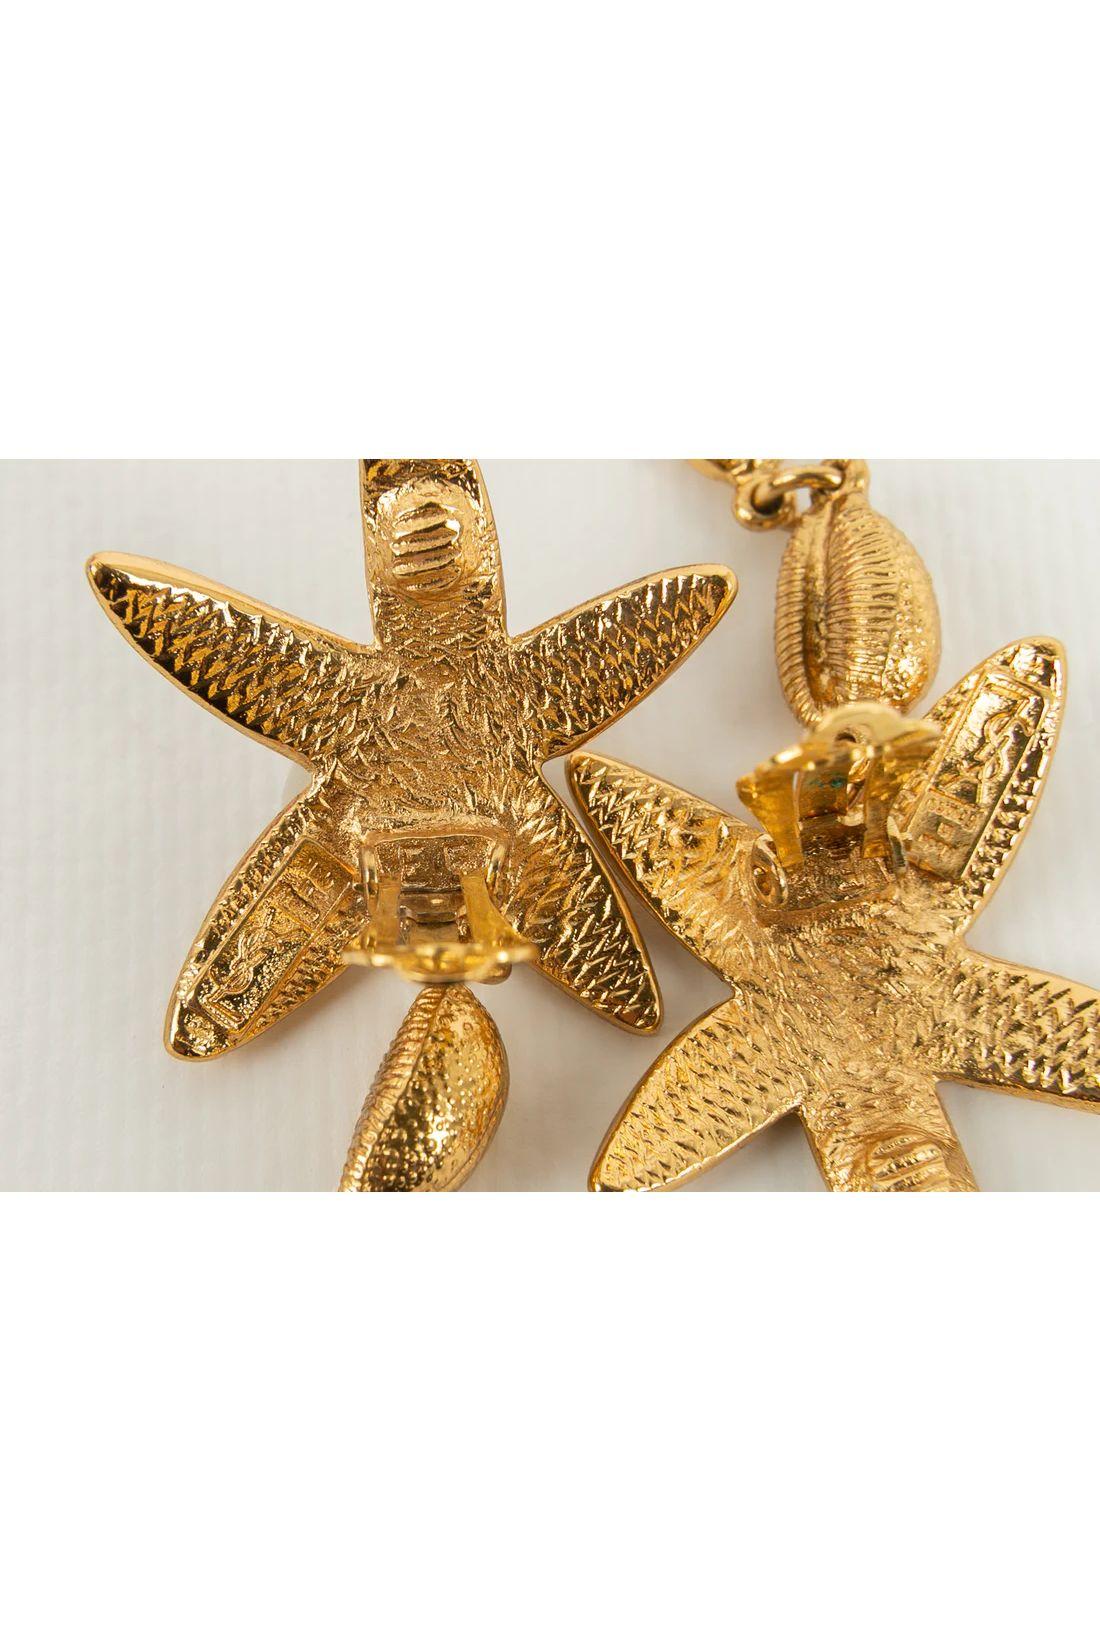 Women's Yves Saint Laurent Earrings in Gold Metal and Green Enamel For Sale